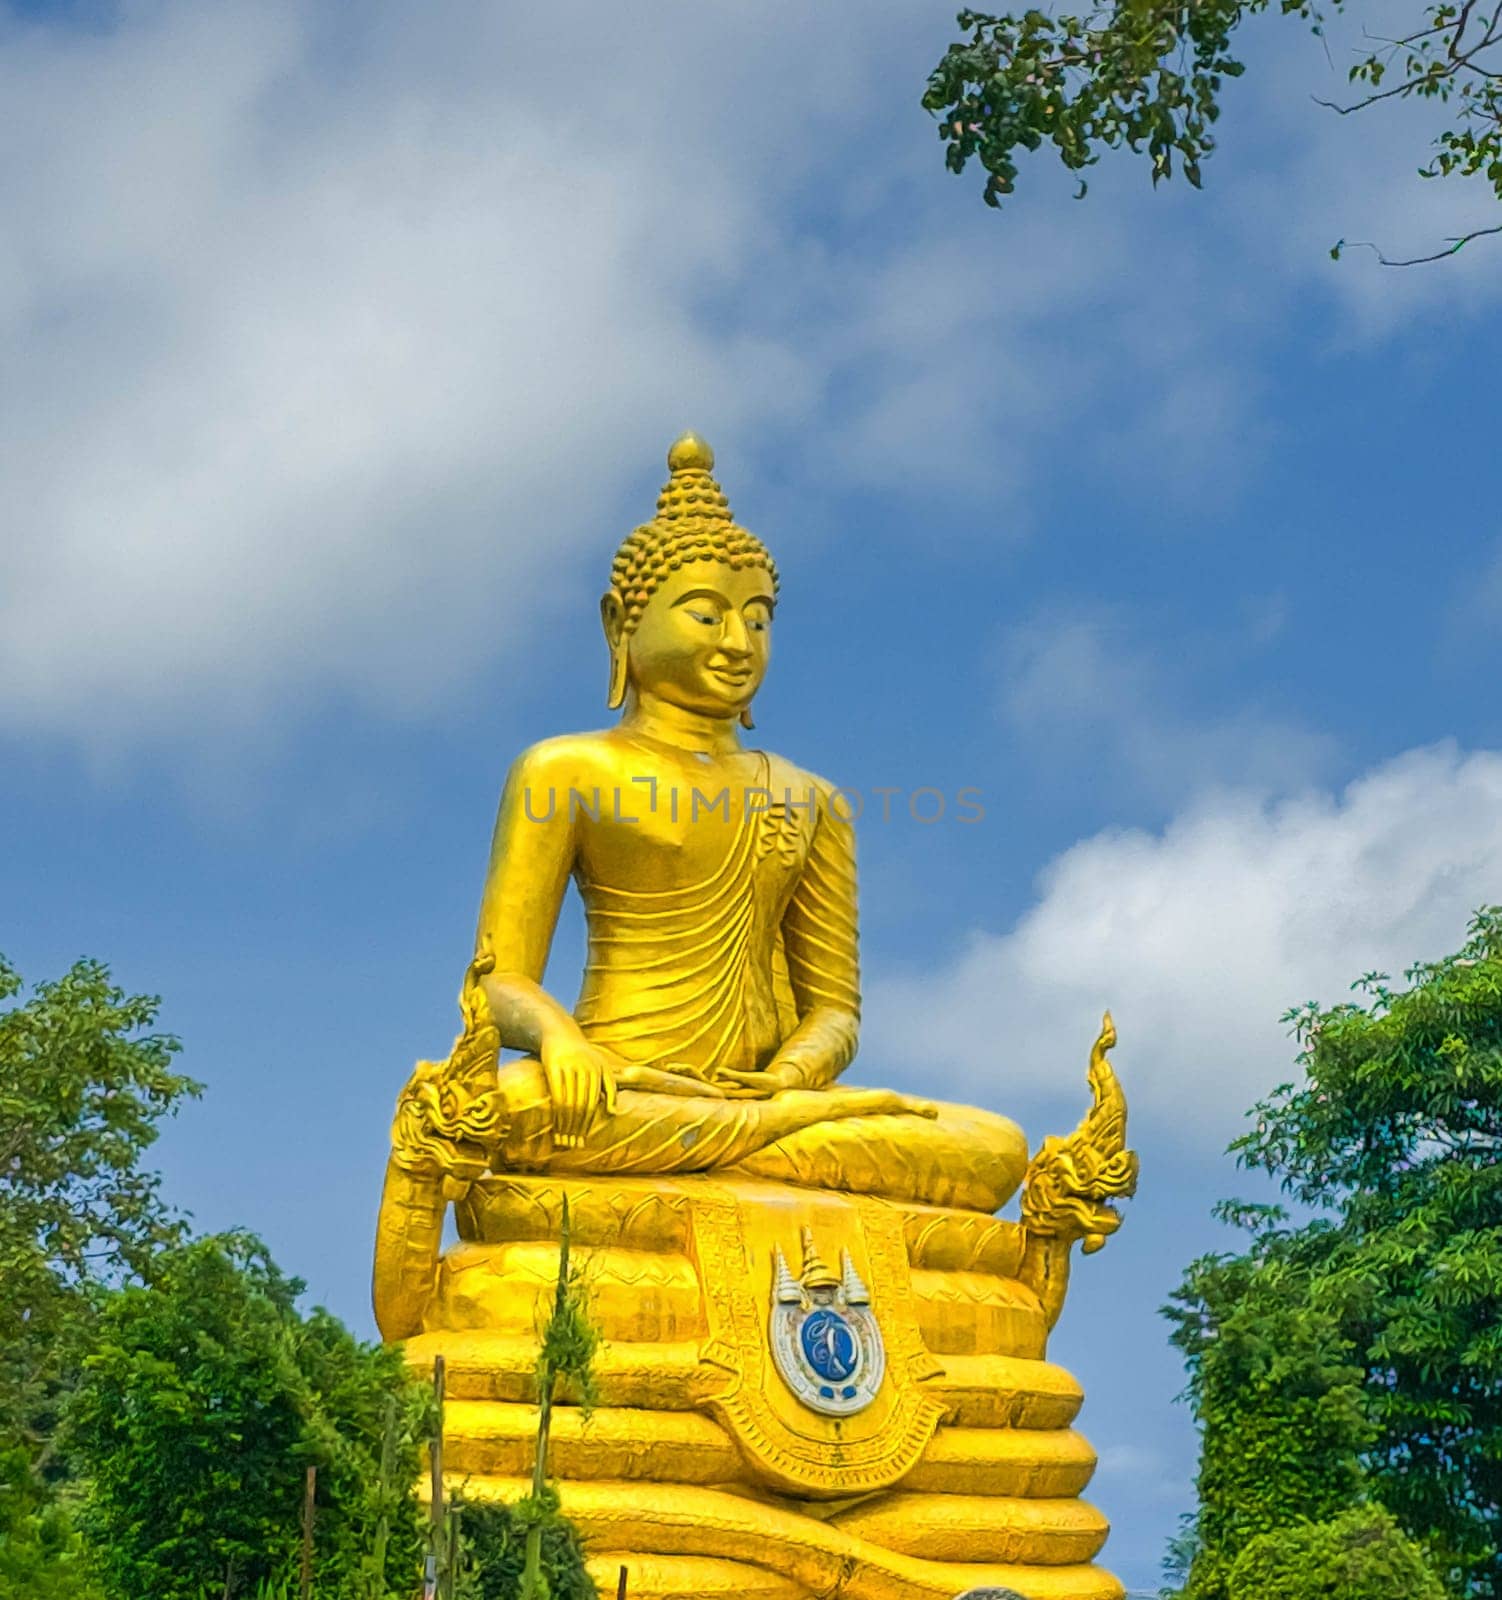 Golden Buddha statue next to statue of Big Buddha in Phuket, Thailand by Elenaphotos21